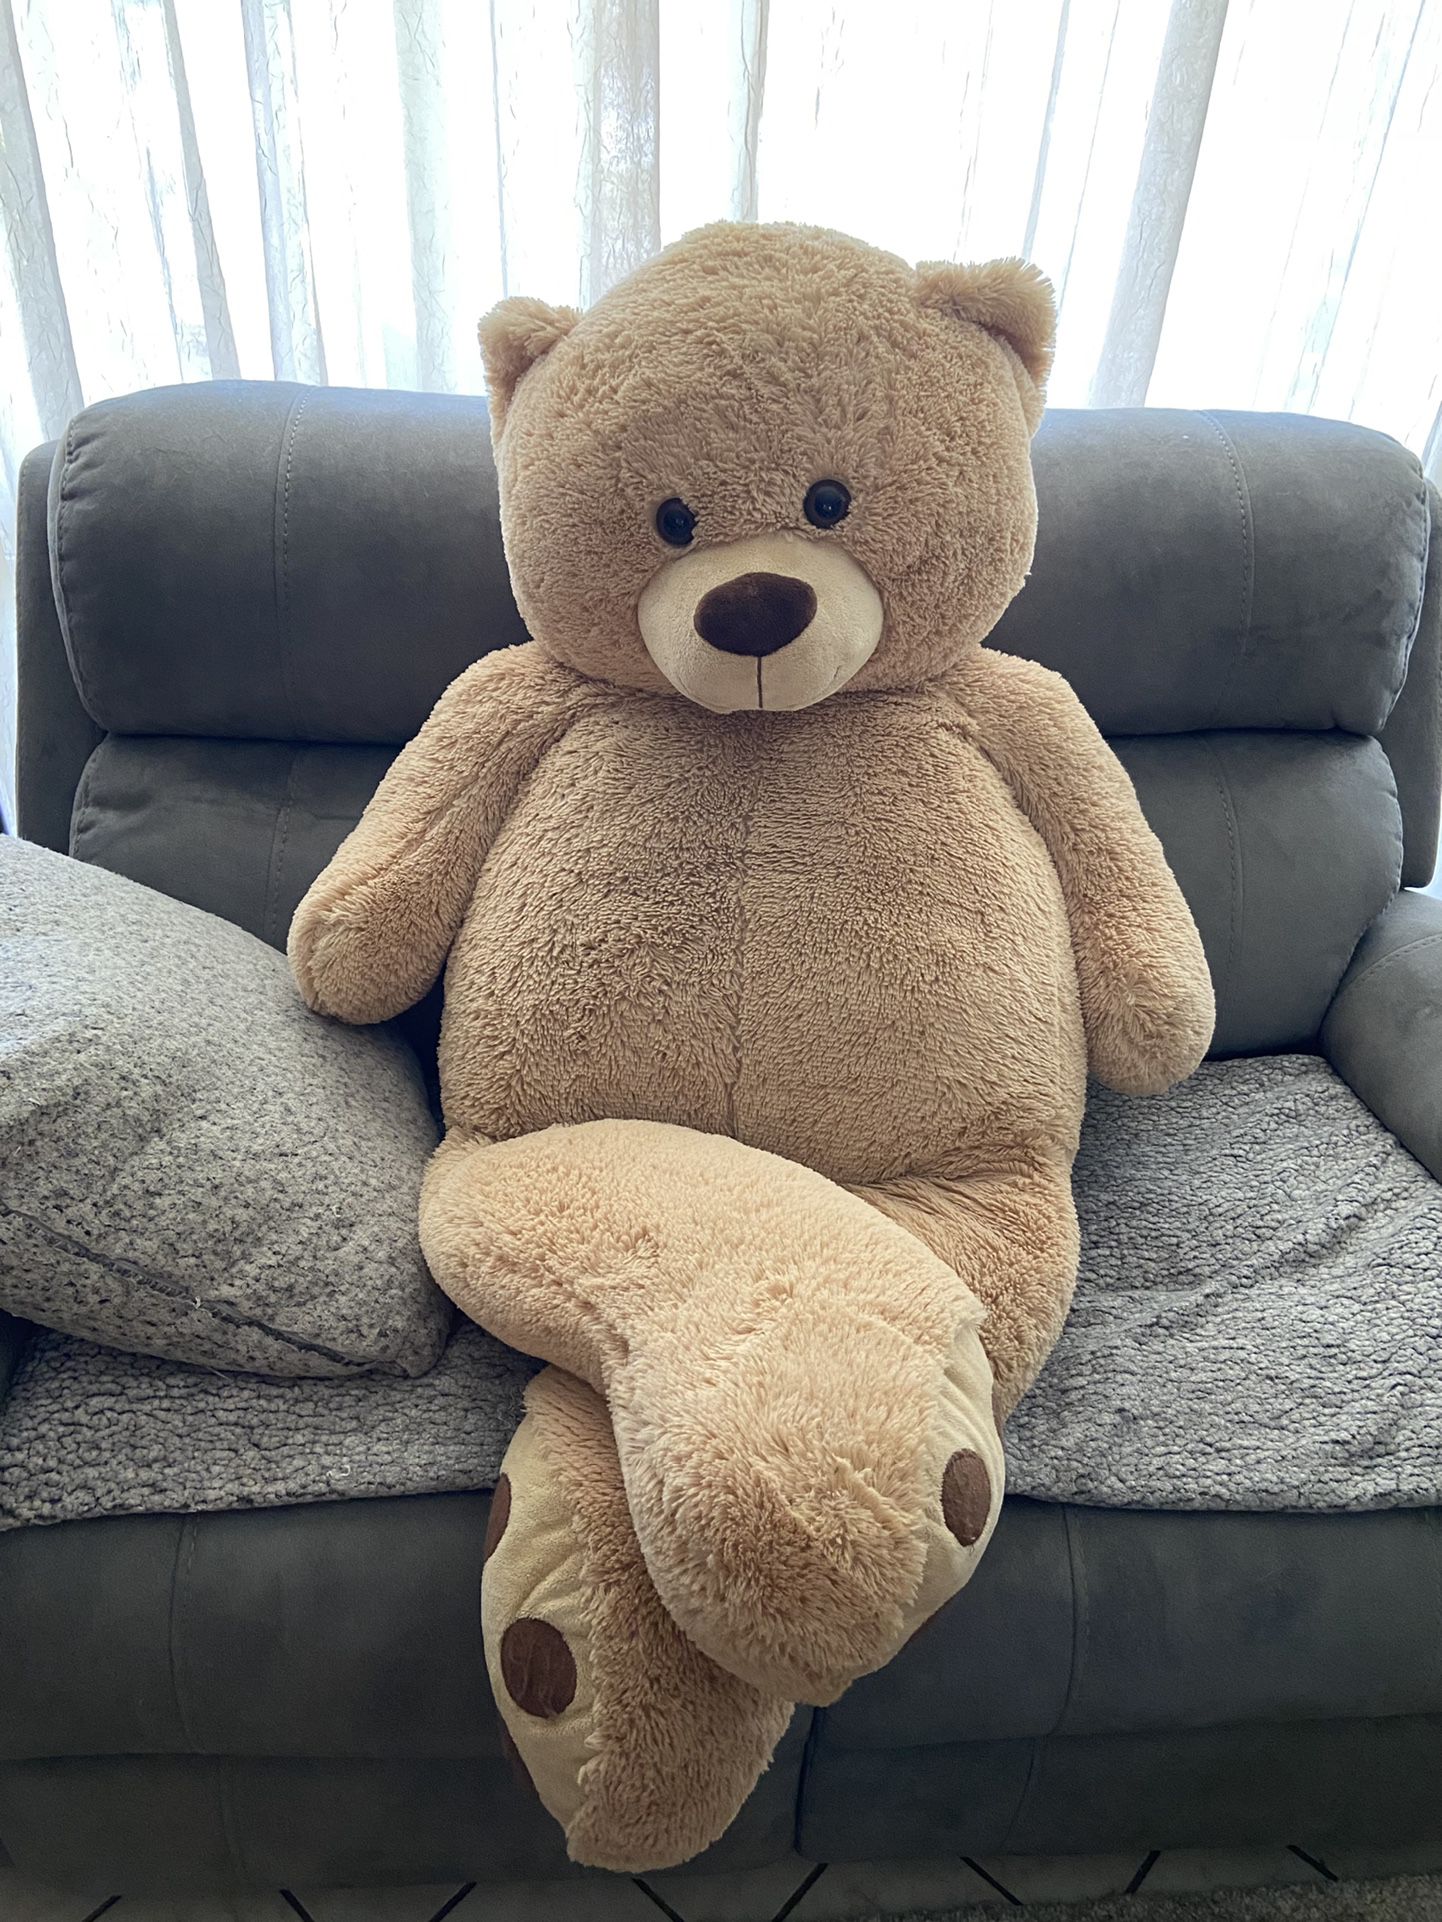 Giant Super Soft Teddy Bear!!!!!